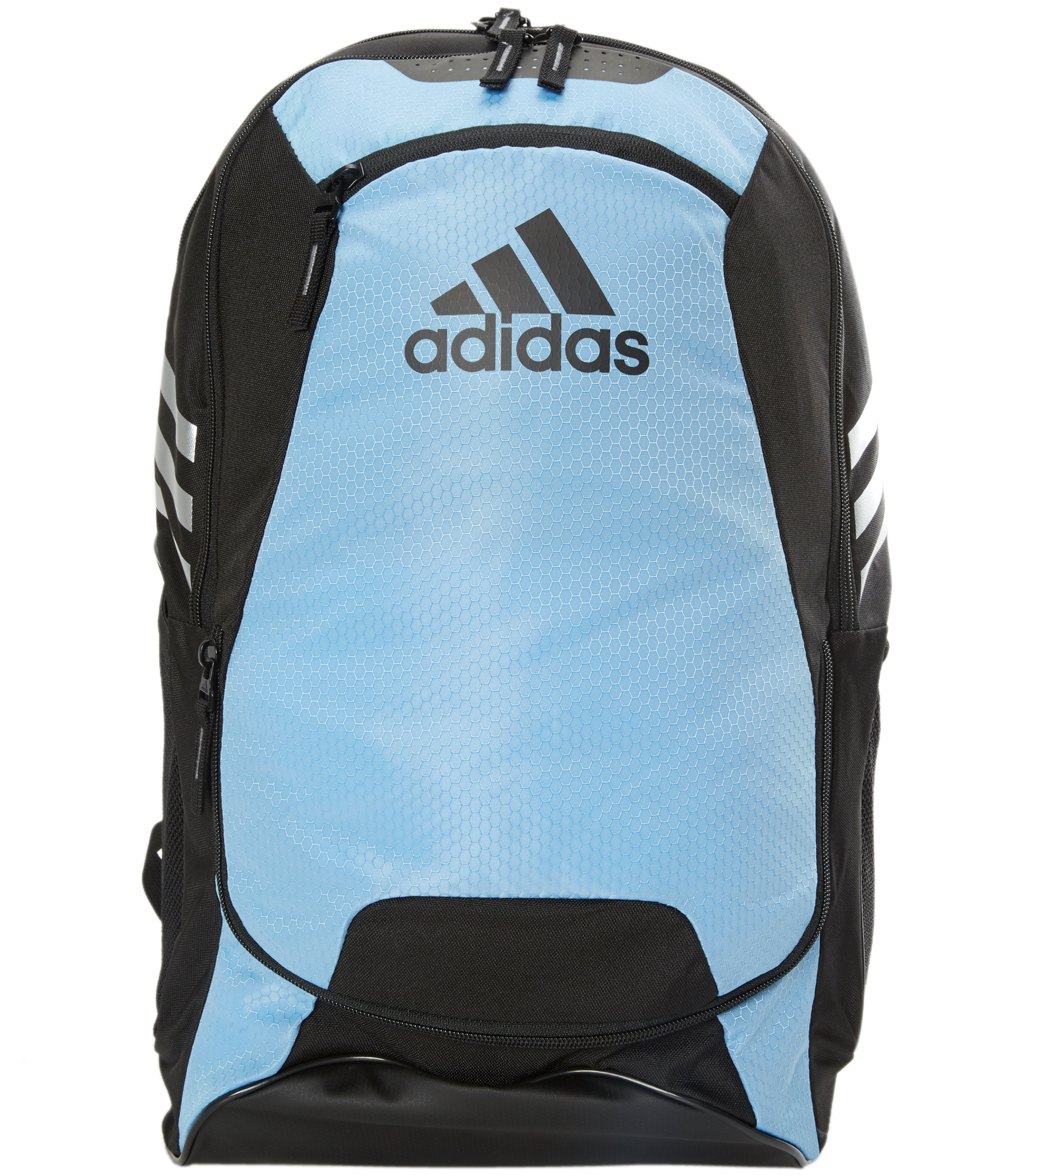 adidas stadium soccer backpack